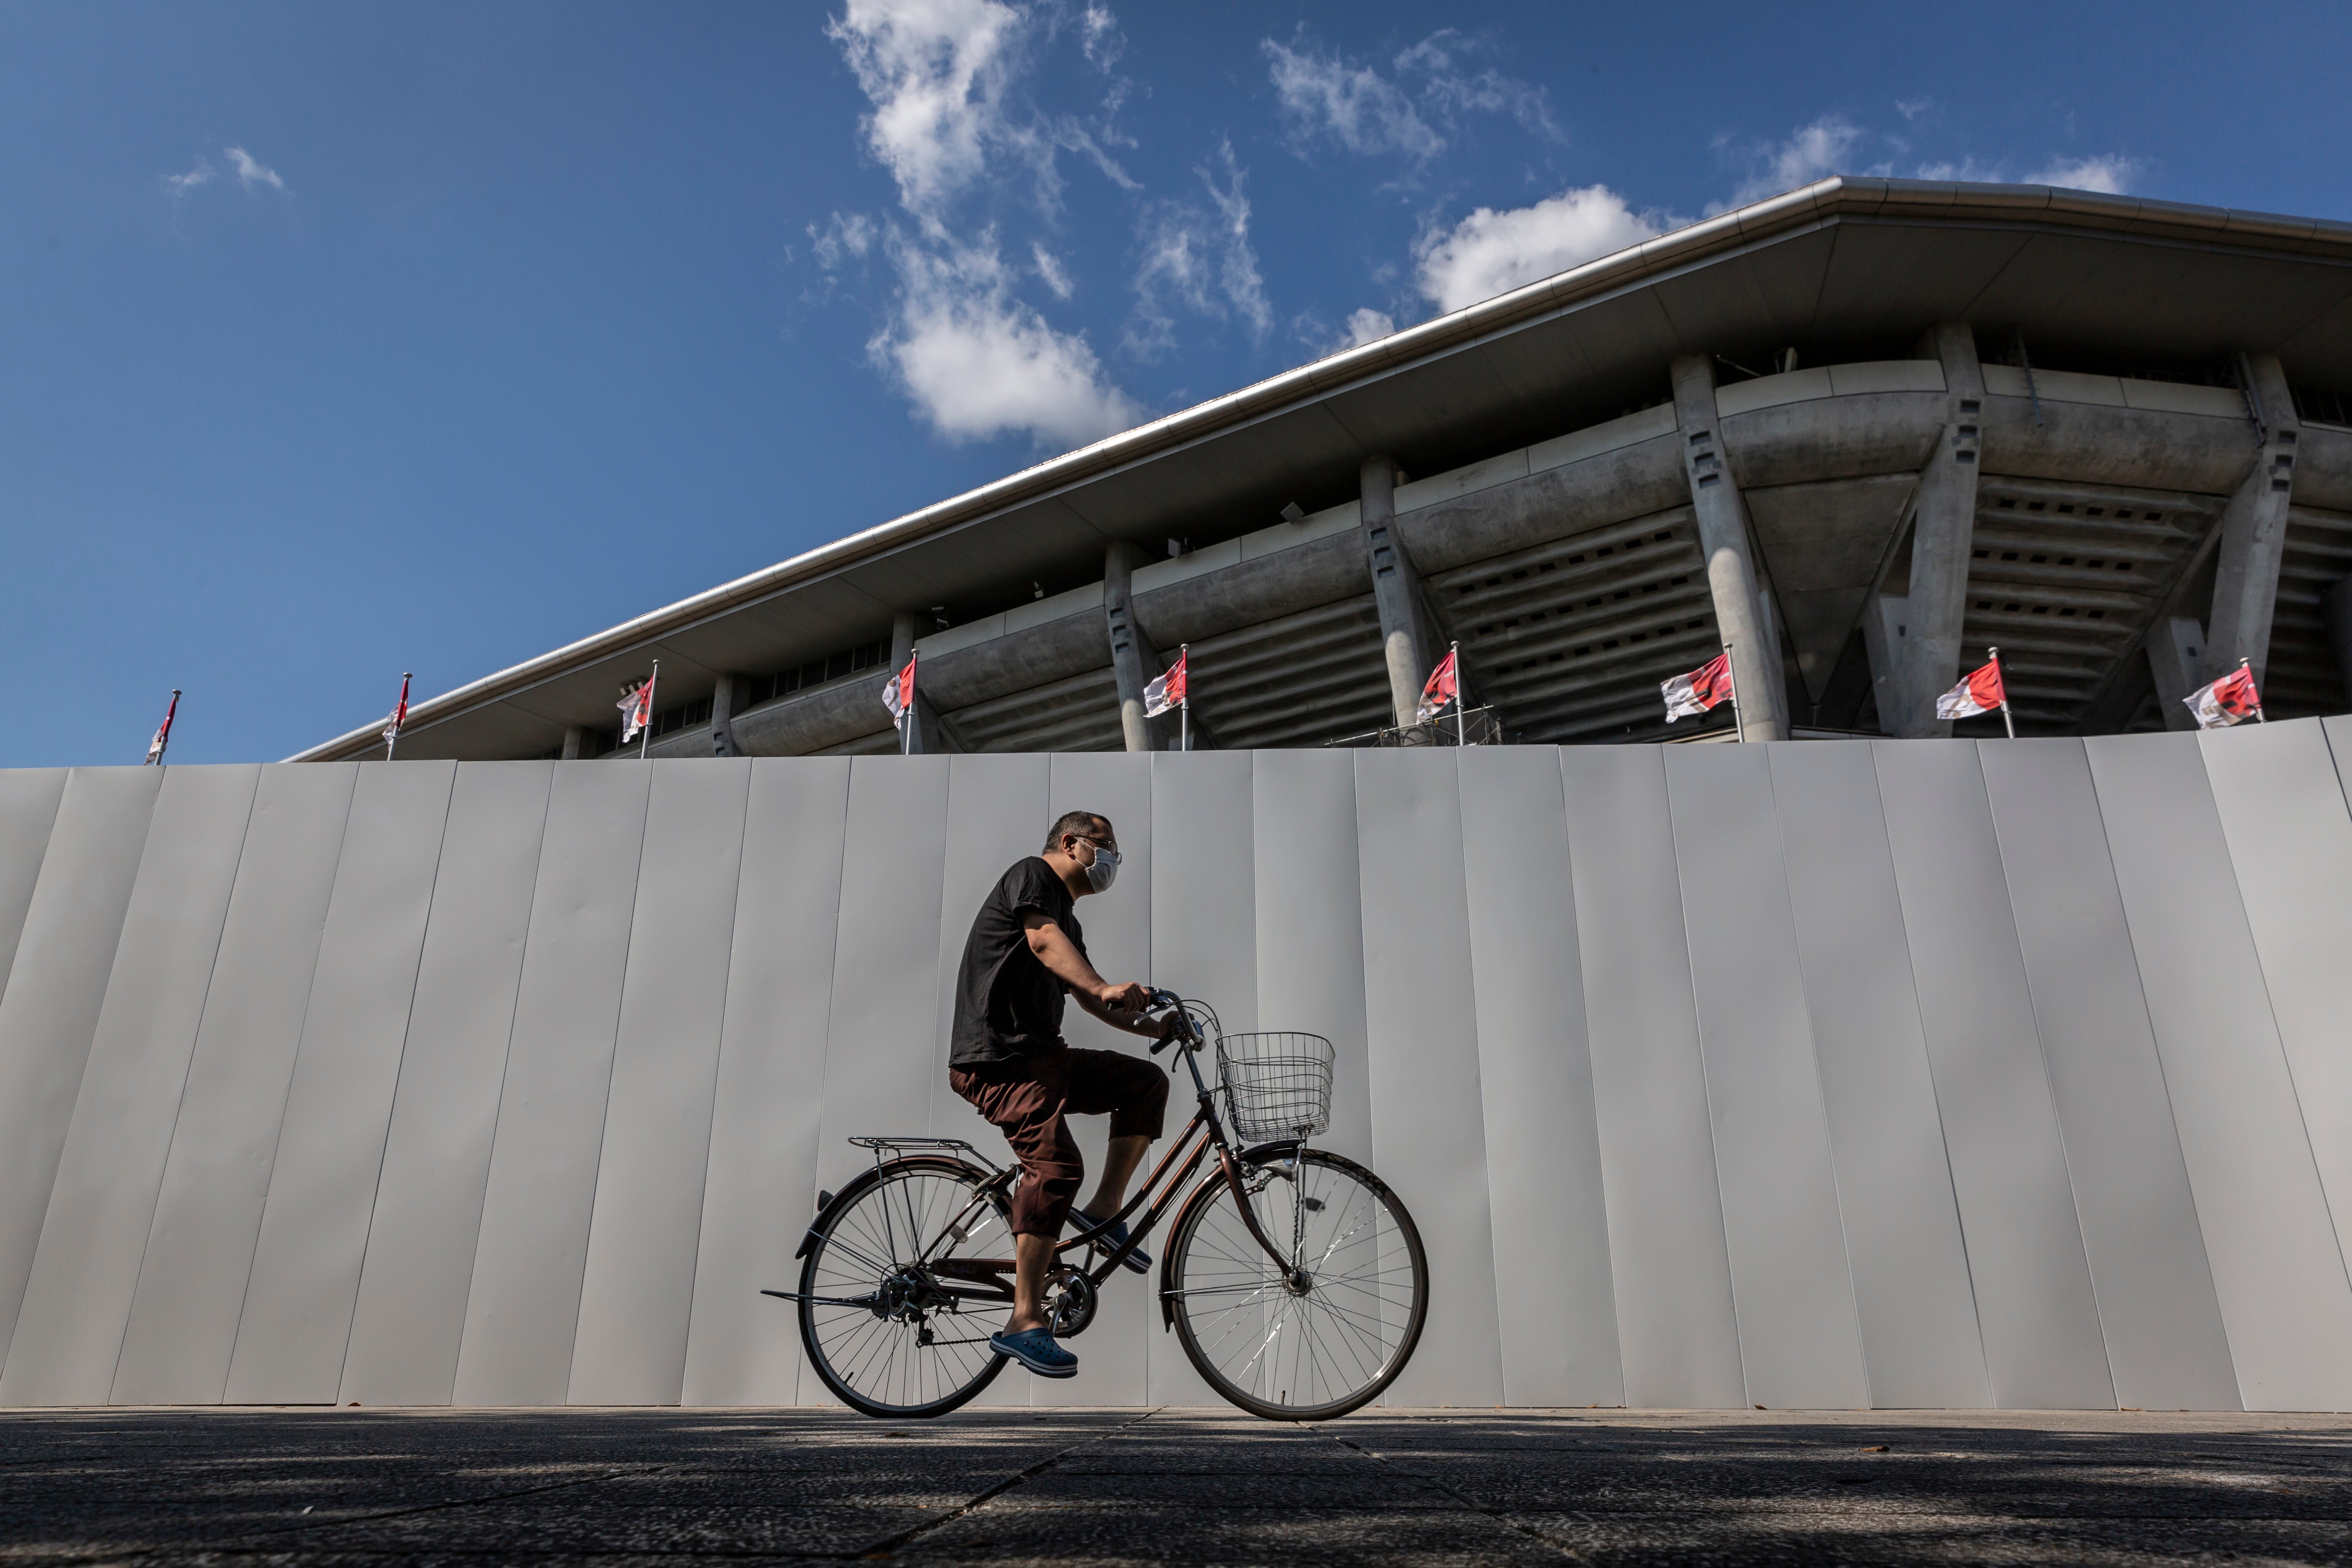 A man cycles past a security wall surrounding the International Stadium Yokohama